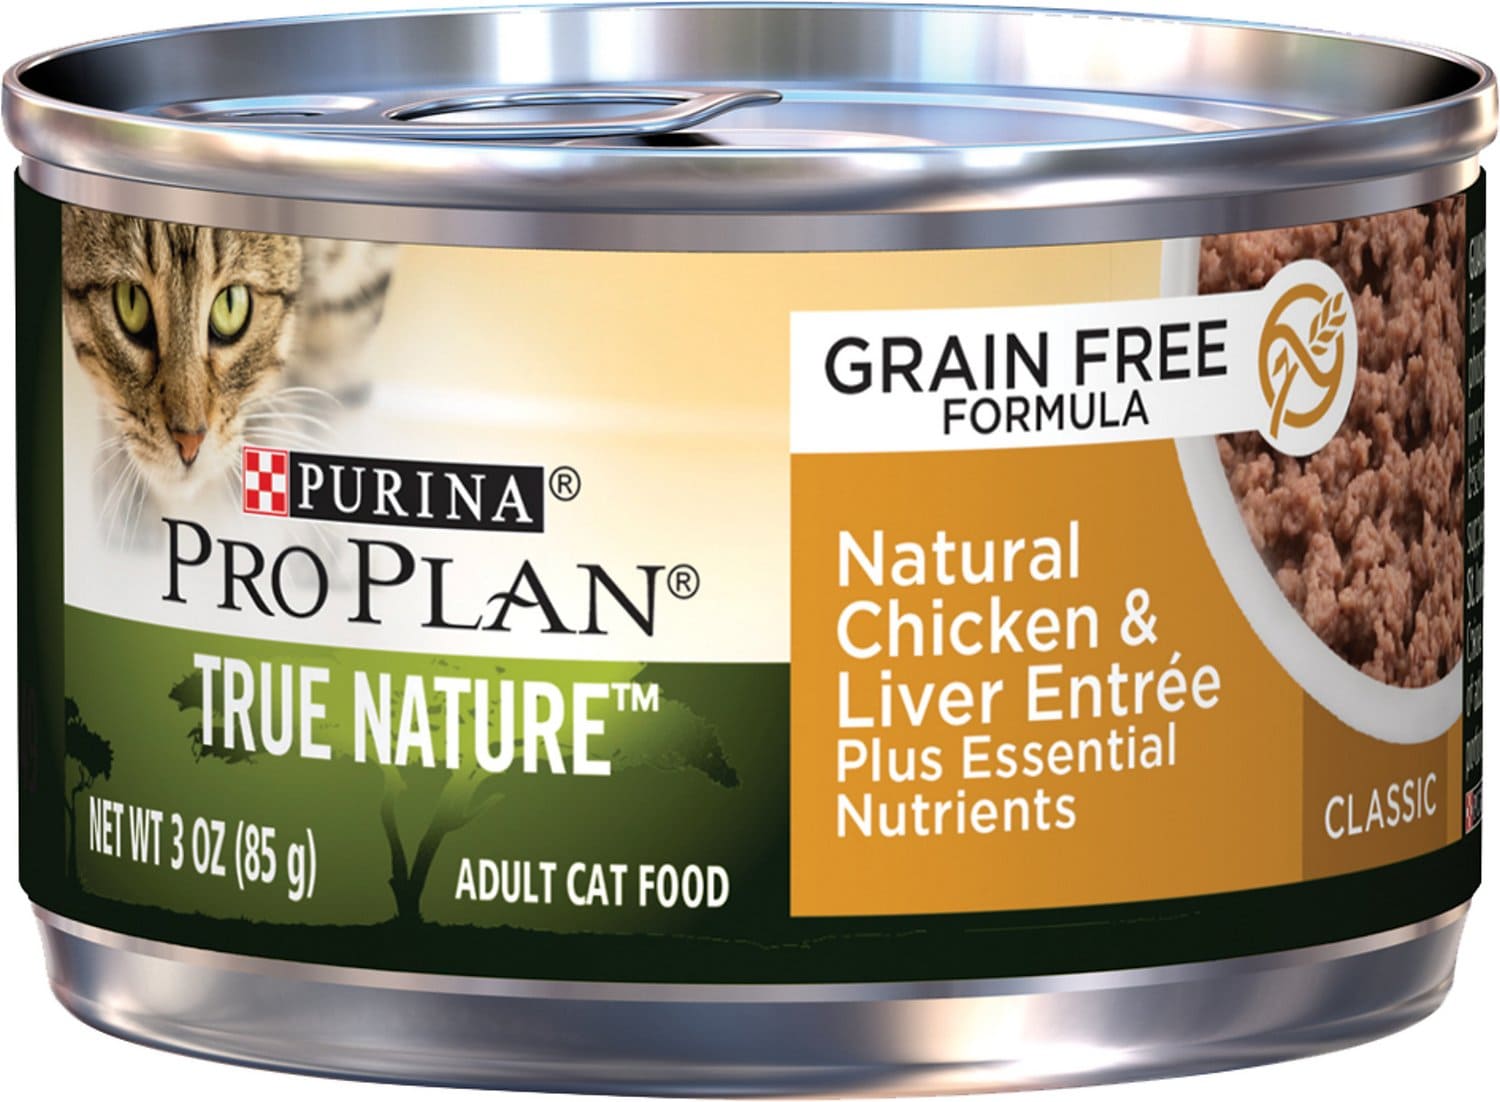 Purina Pro Plan True Nature Entré Classic 24 x 3 oz can Natural Chicken & Liver 1